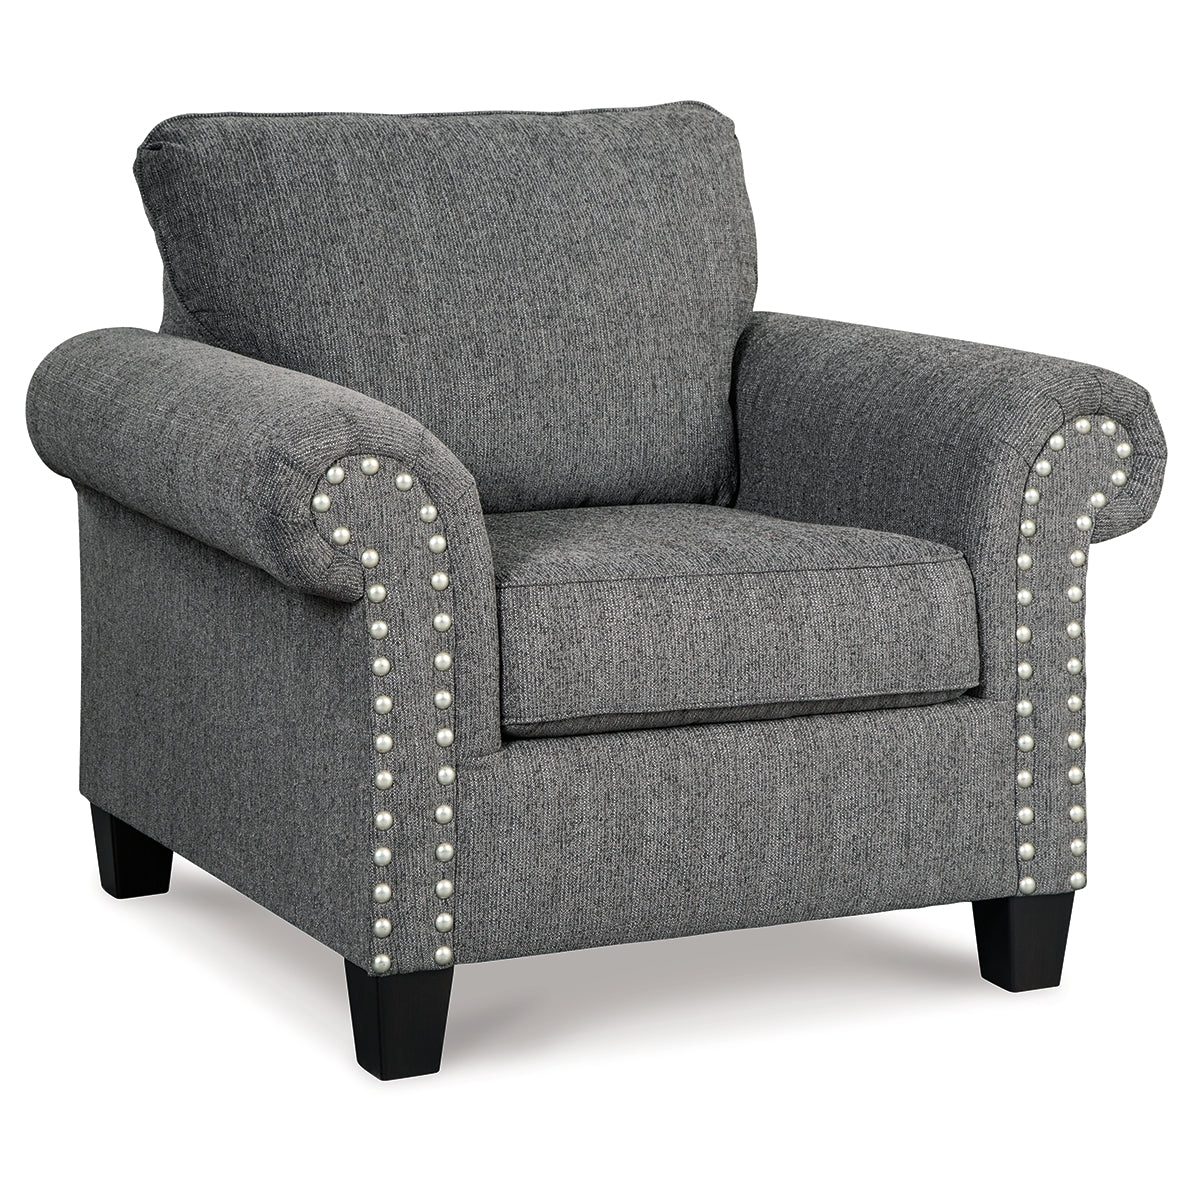 Agleno Sofa, Loveseat, Chair and Ottoman